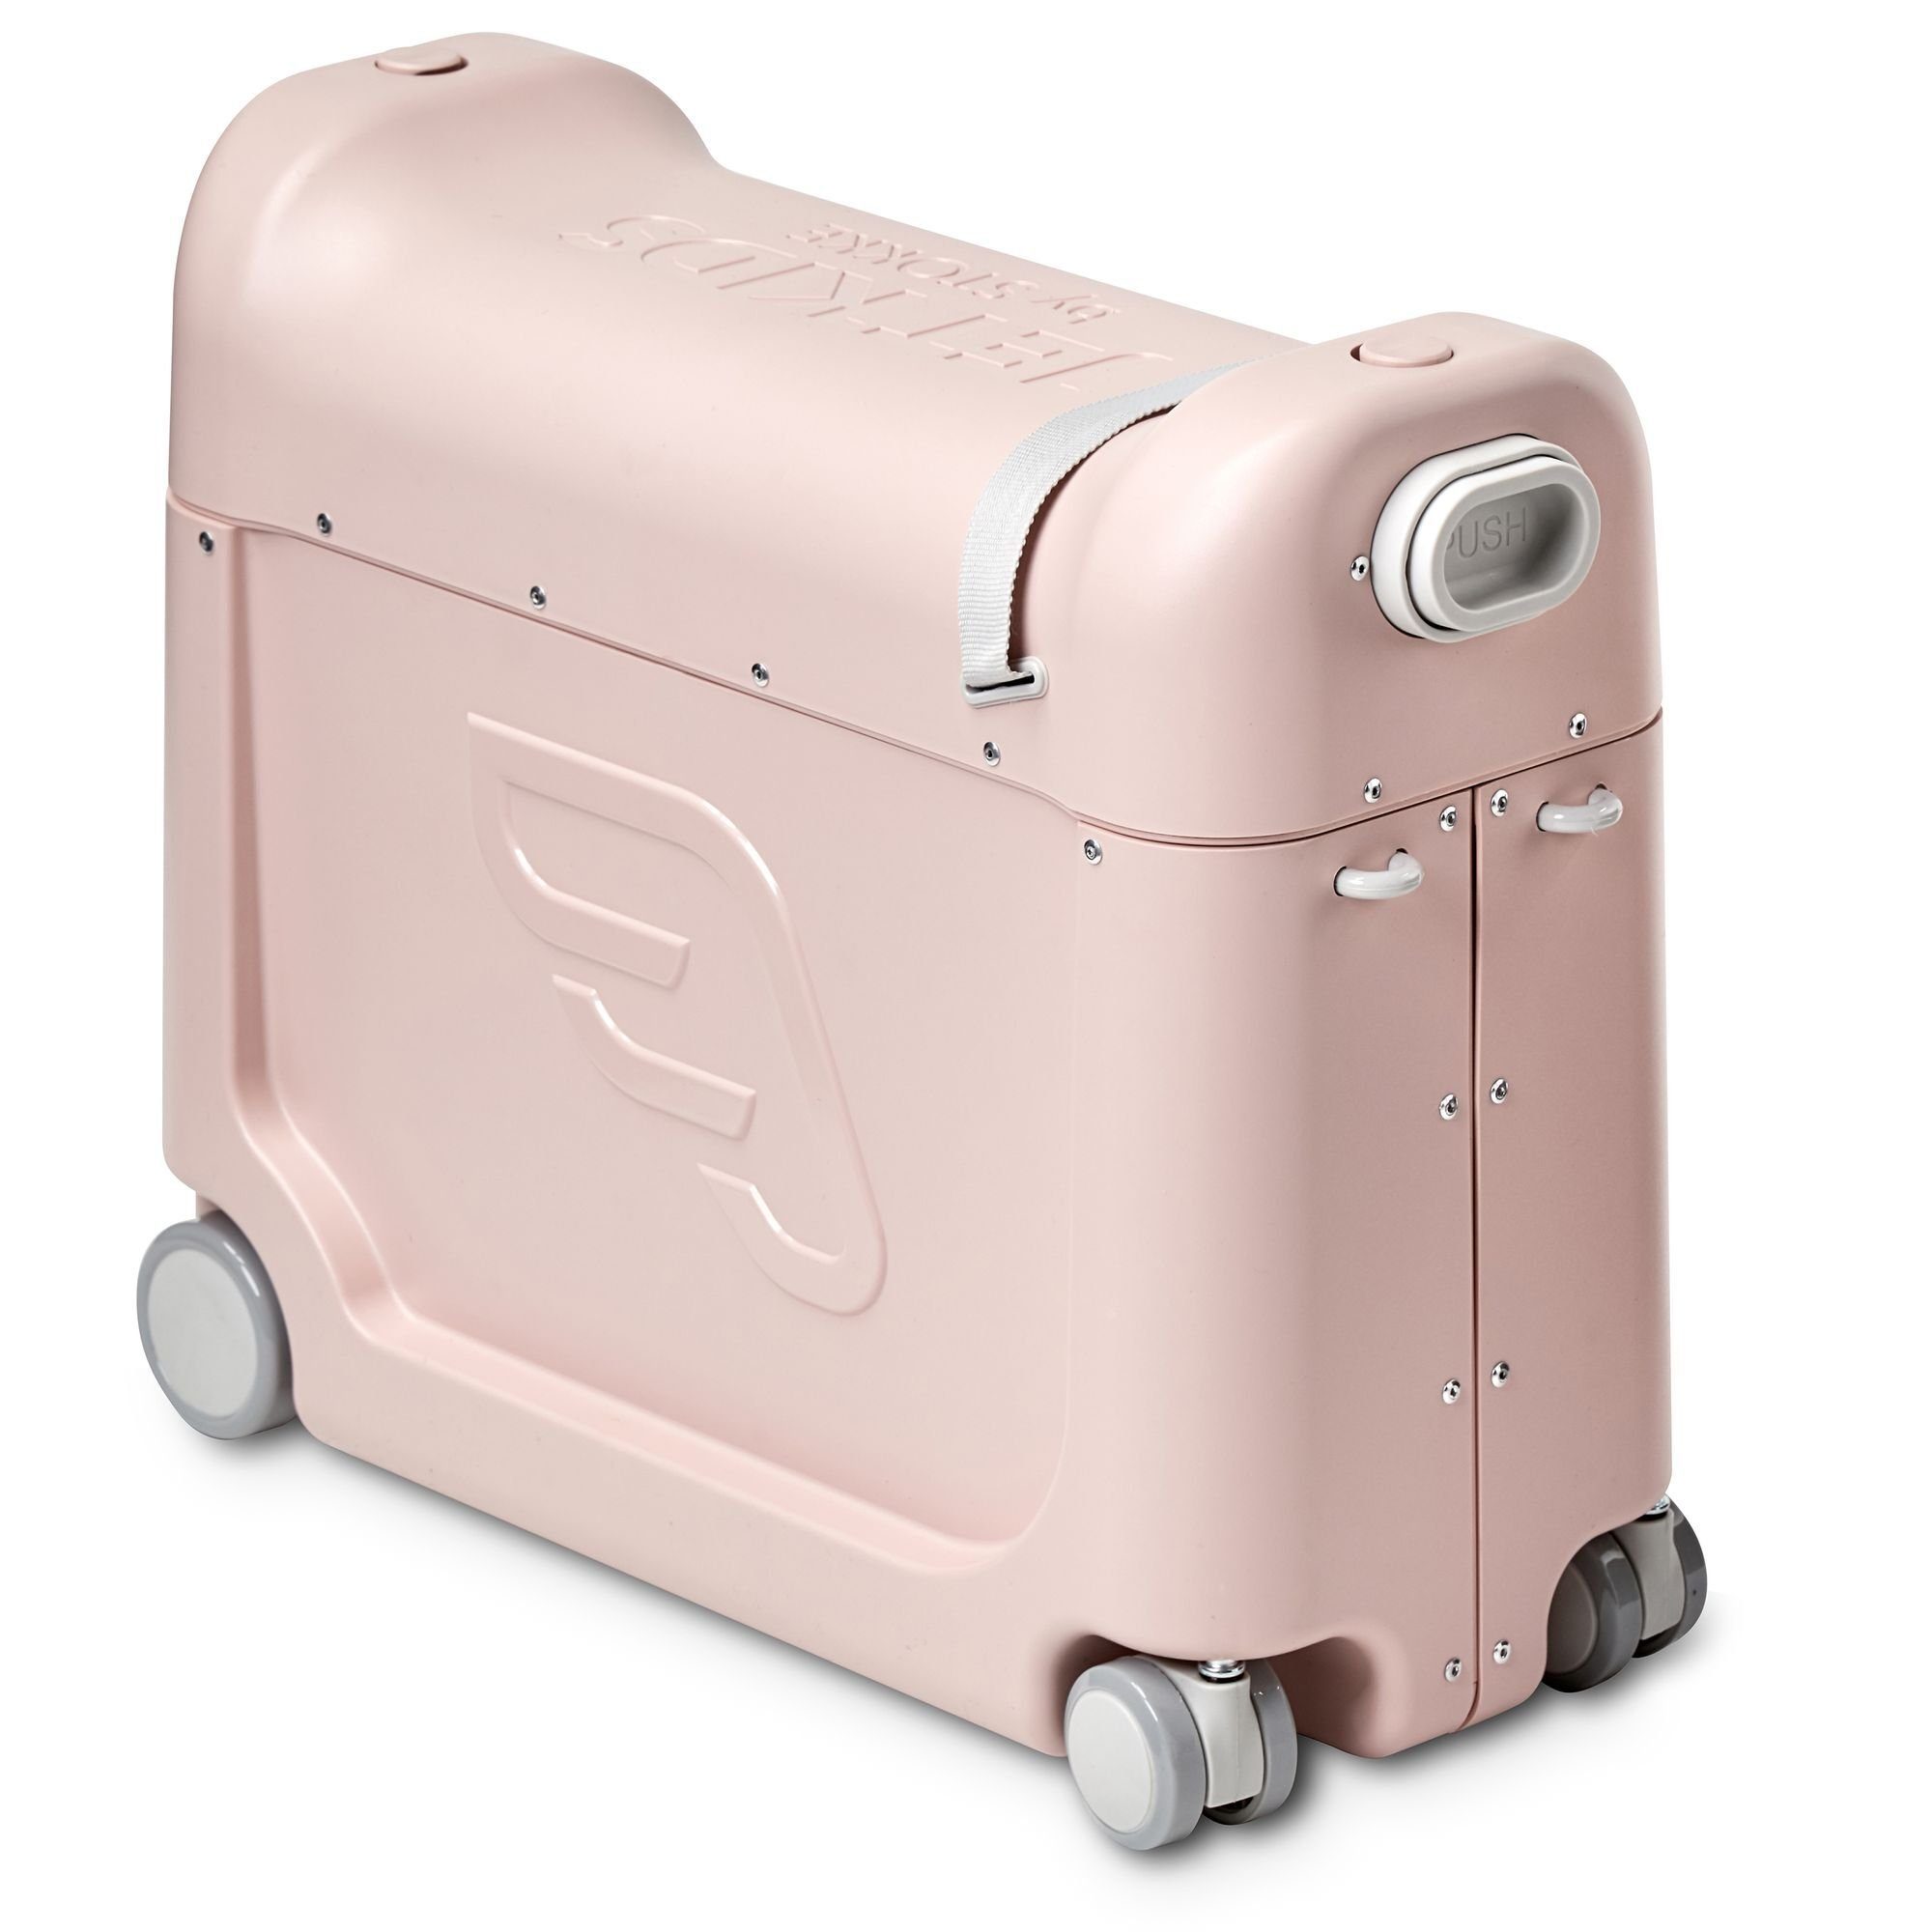 4 ABS pink BedBox, Rollen, Jetkids Kinderkoffer Stokke